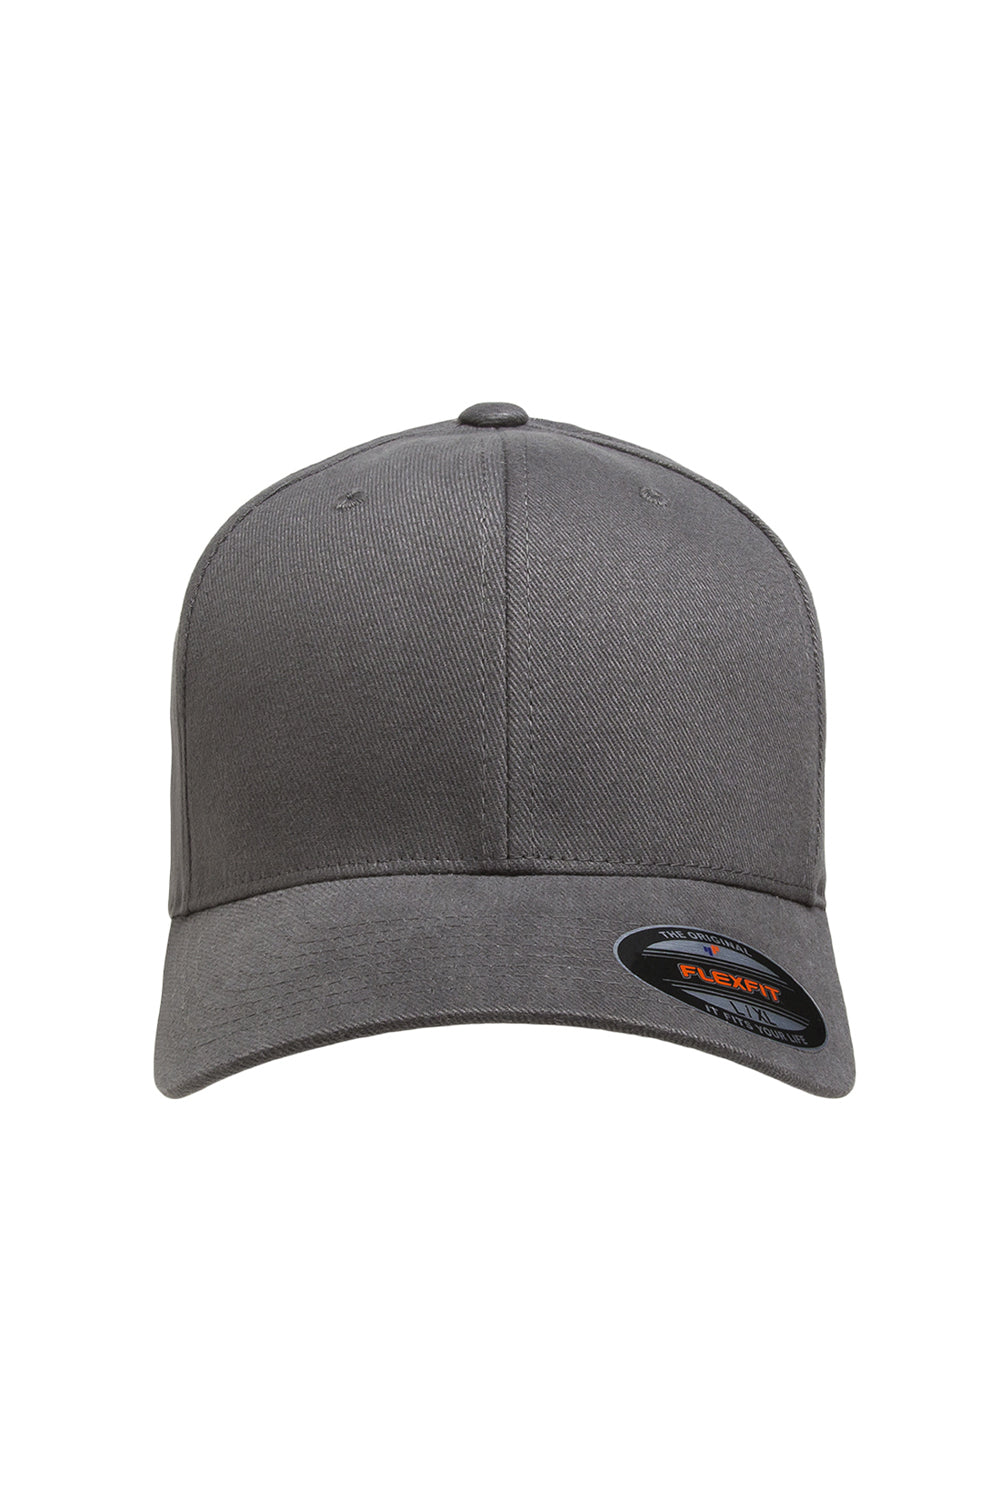 Flexfit 6377 Mens Stretch Fit Hat Grey Front